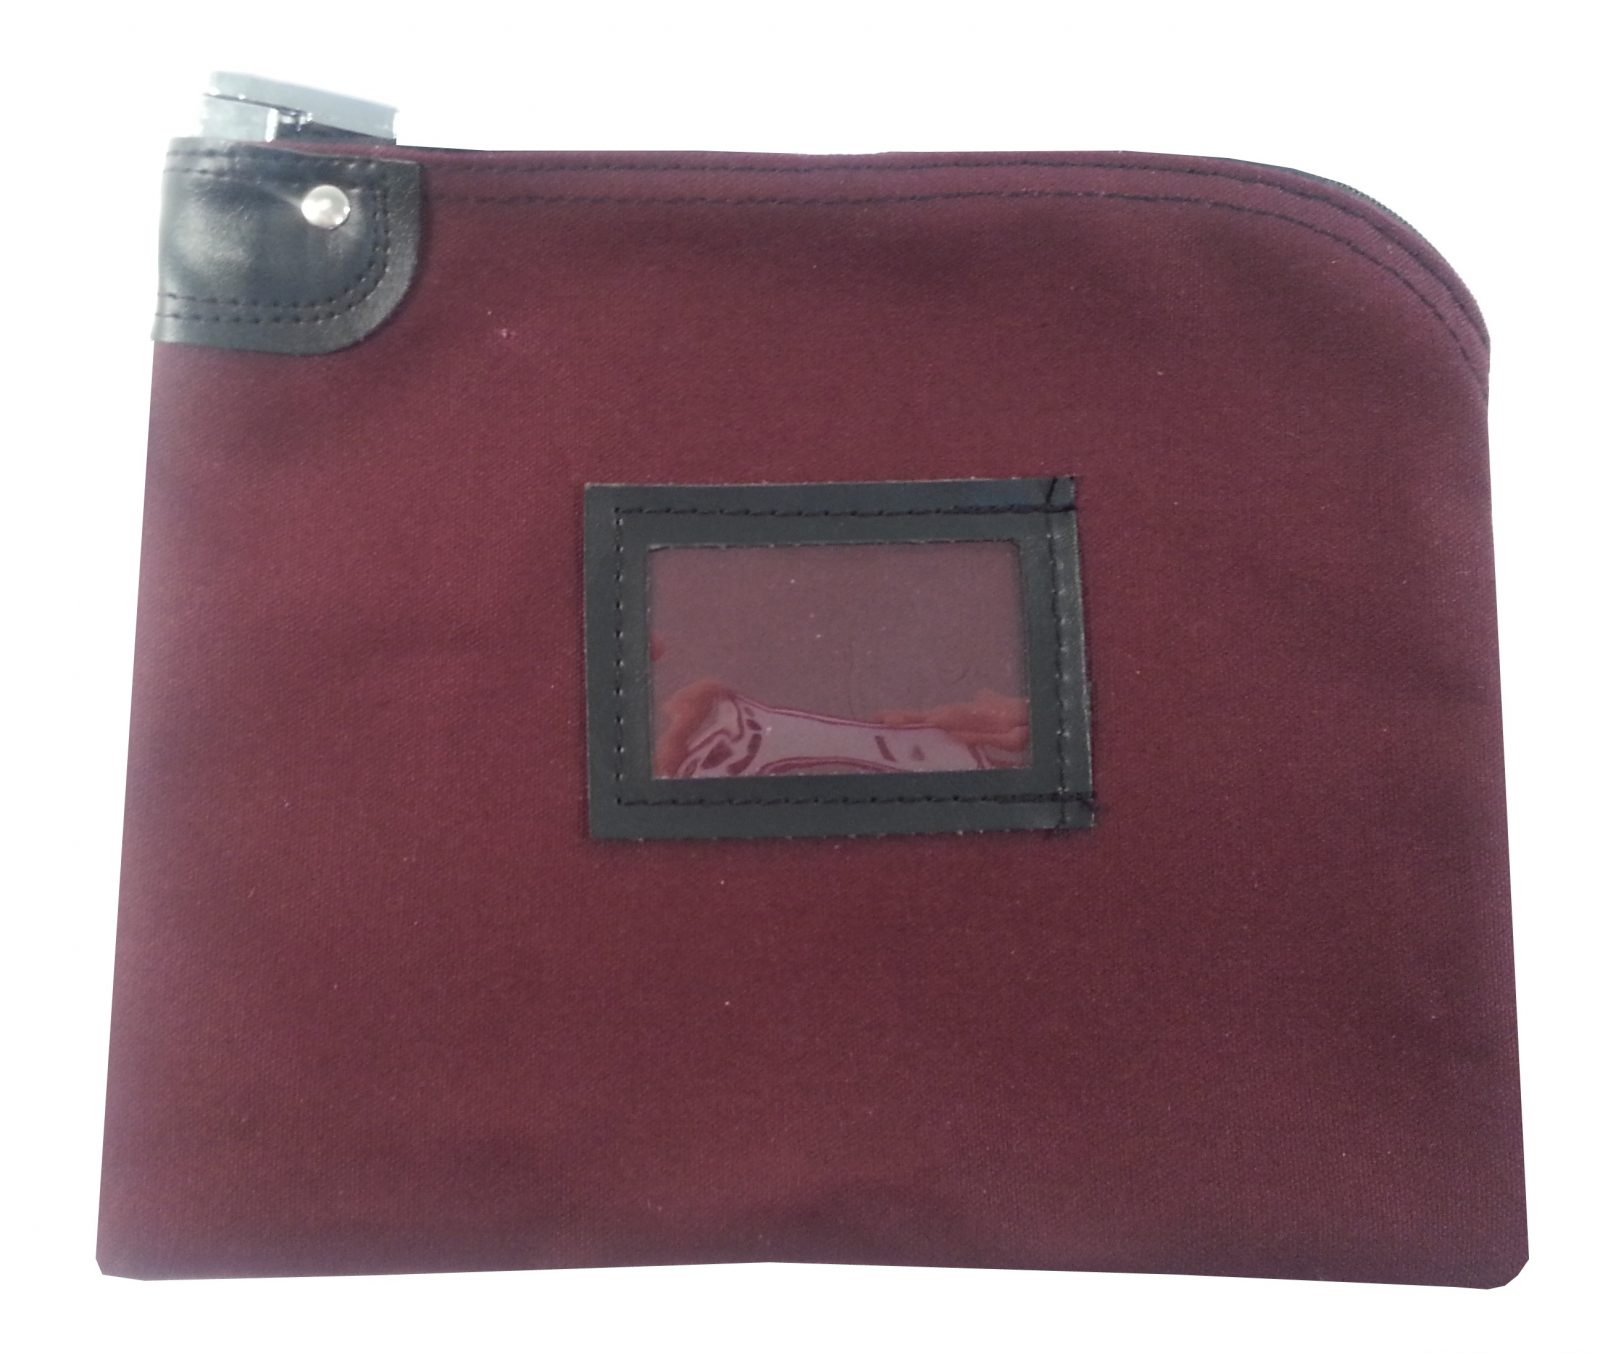 Personalized Canvas Coin Money Sacks Bag with Wrist Strap Bank Deposit Change Transit Zipper